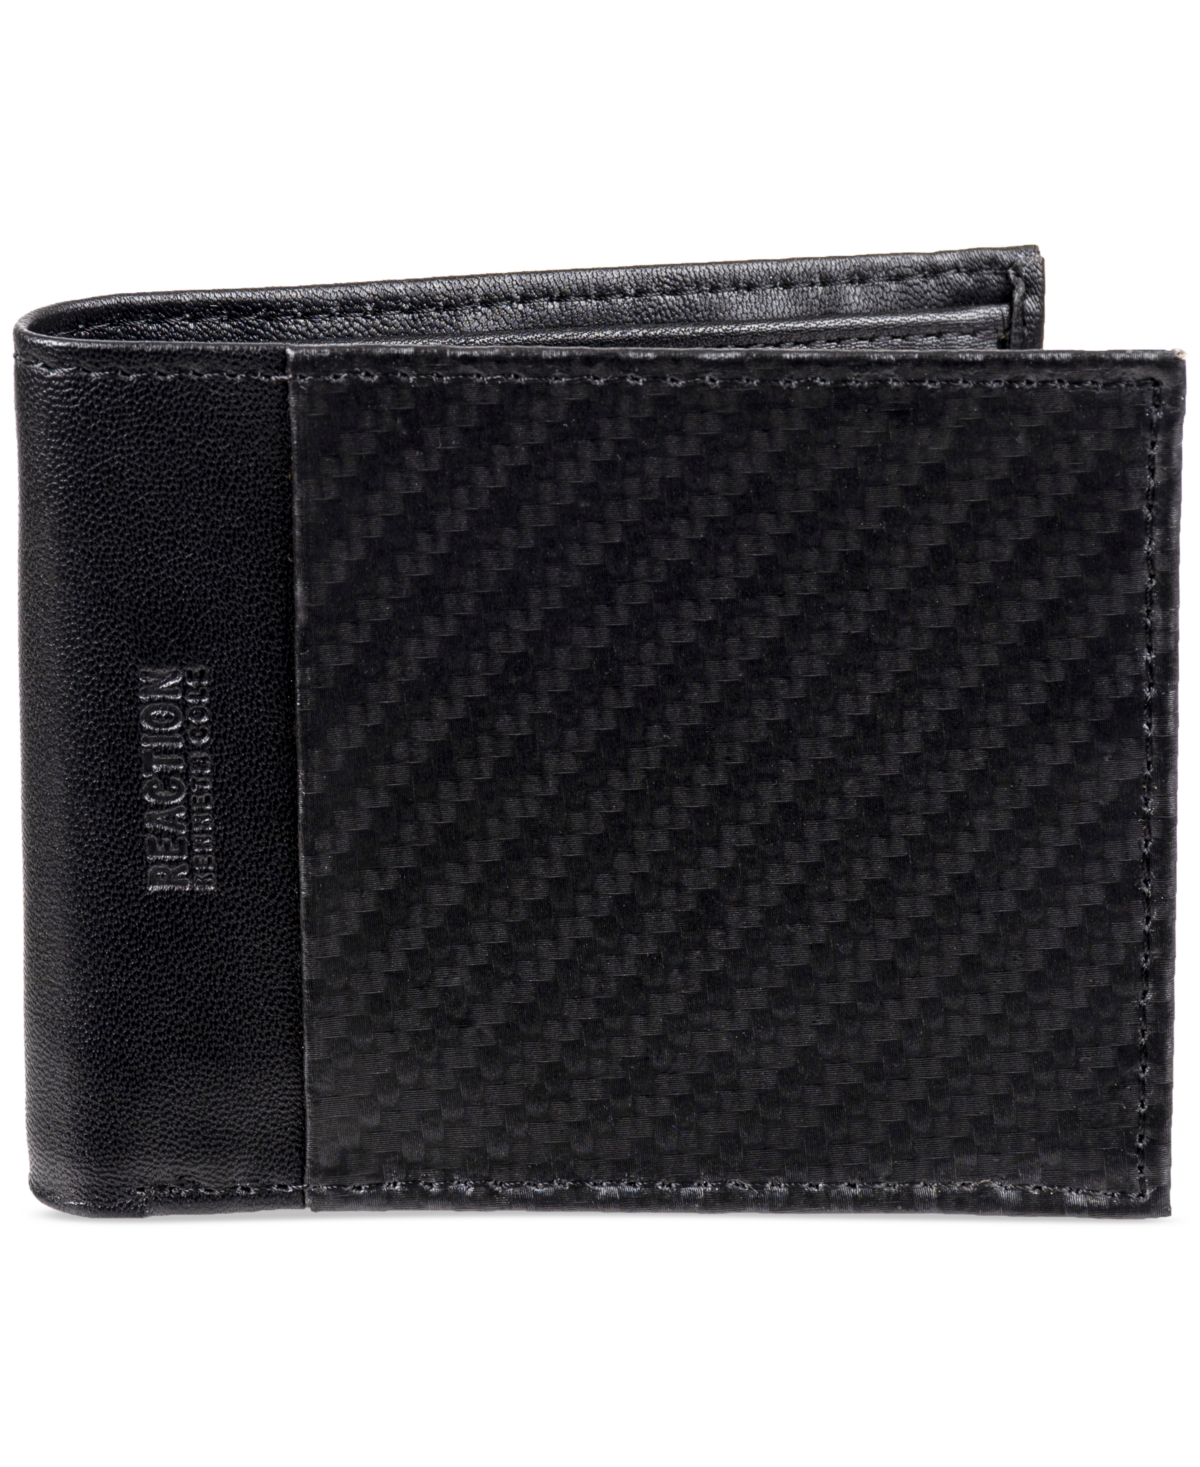 Men's Techni-cole Rfid Leather Slimfold Wallet - Black